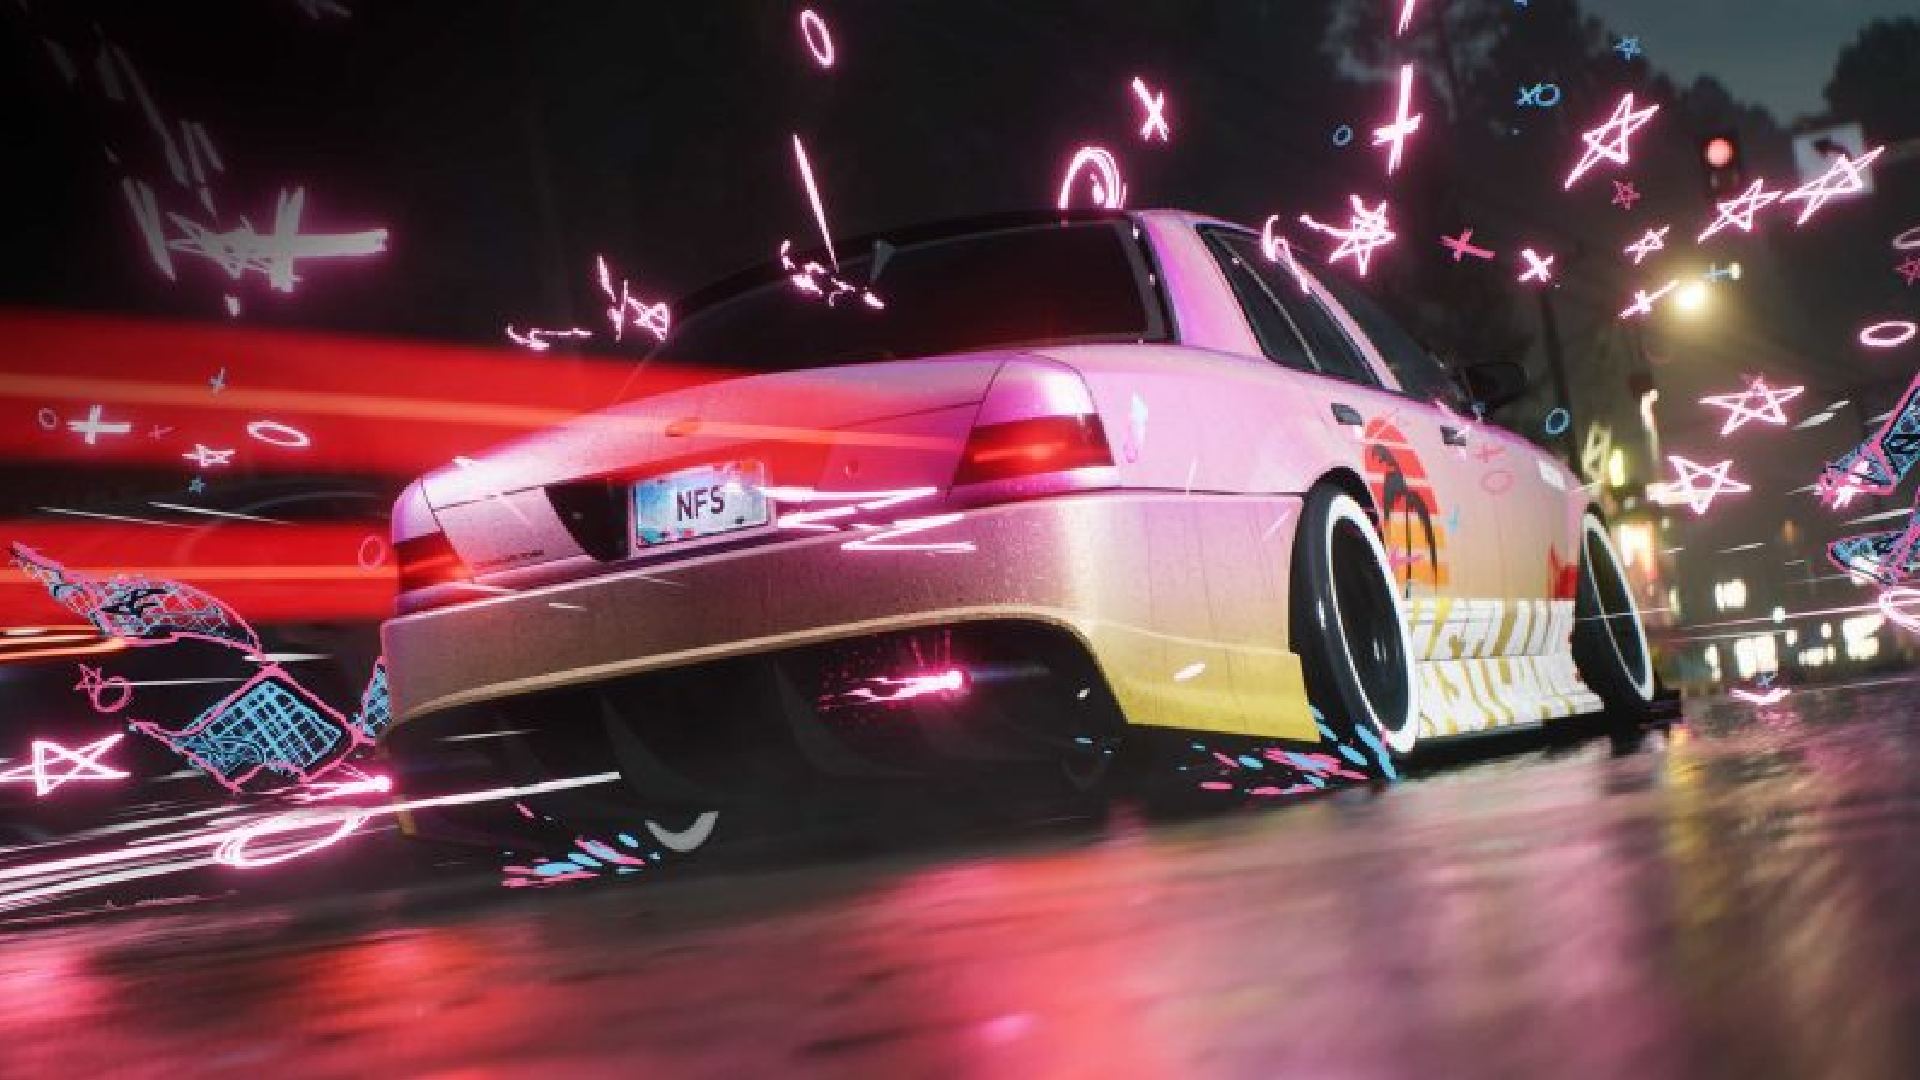 Need For Speed ​​Unbound Cartoon Anime Effects: สามารถเห็นรถกำลังขับผ่านไปด้วยเอฟเฟกต์สีชมพู